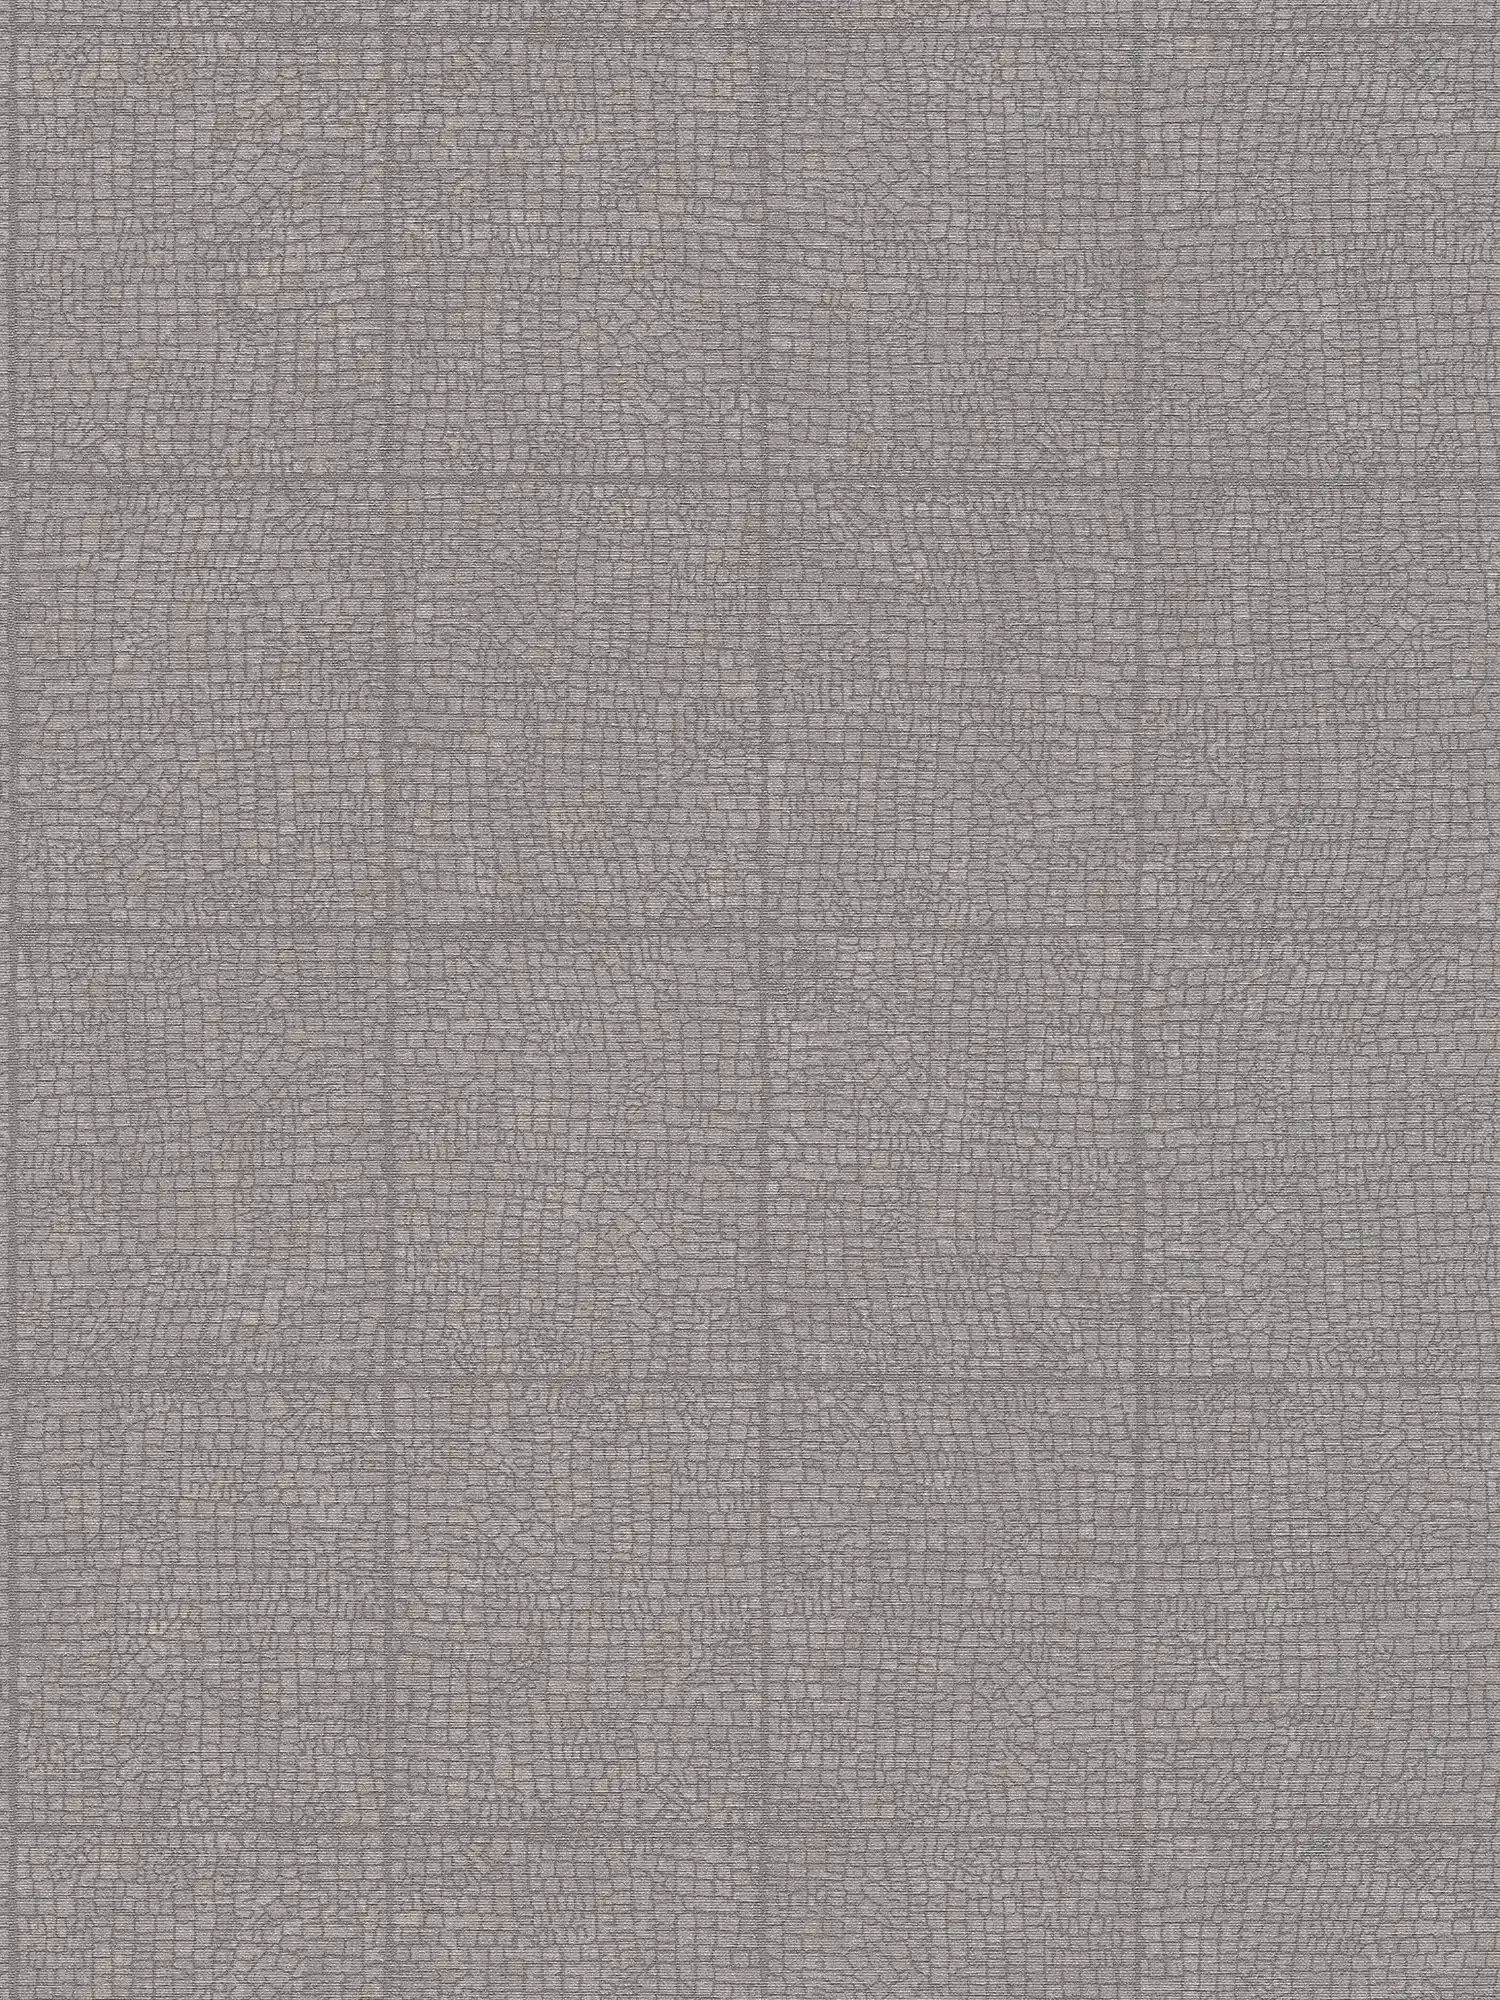 Tile optics wallpaper used look & crackle effect - grey
